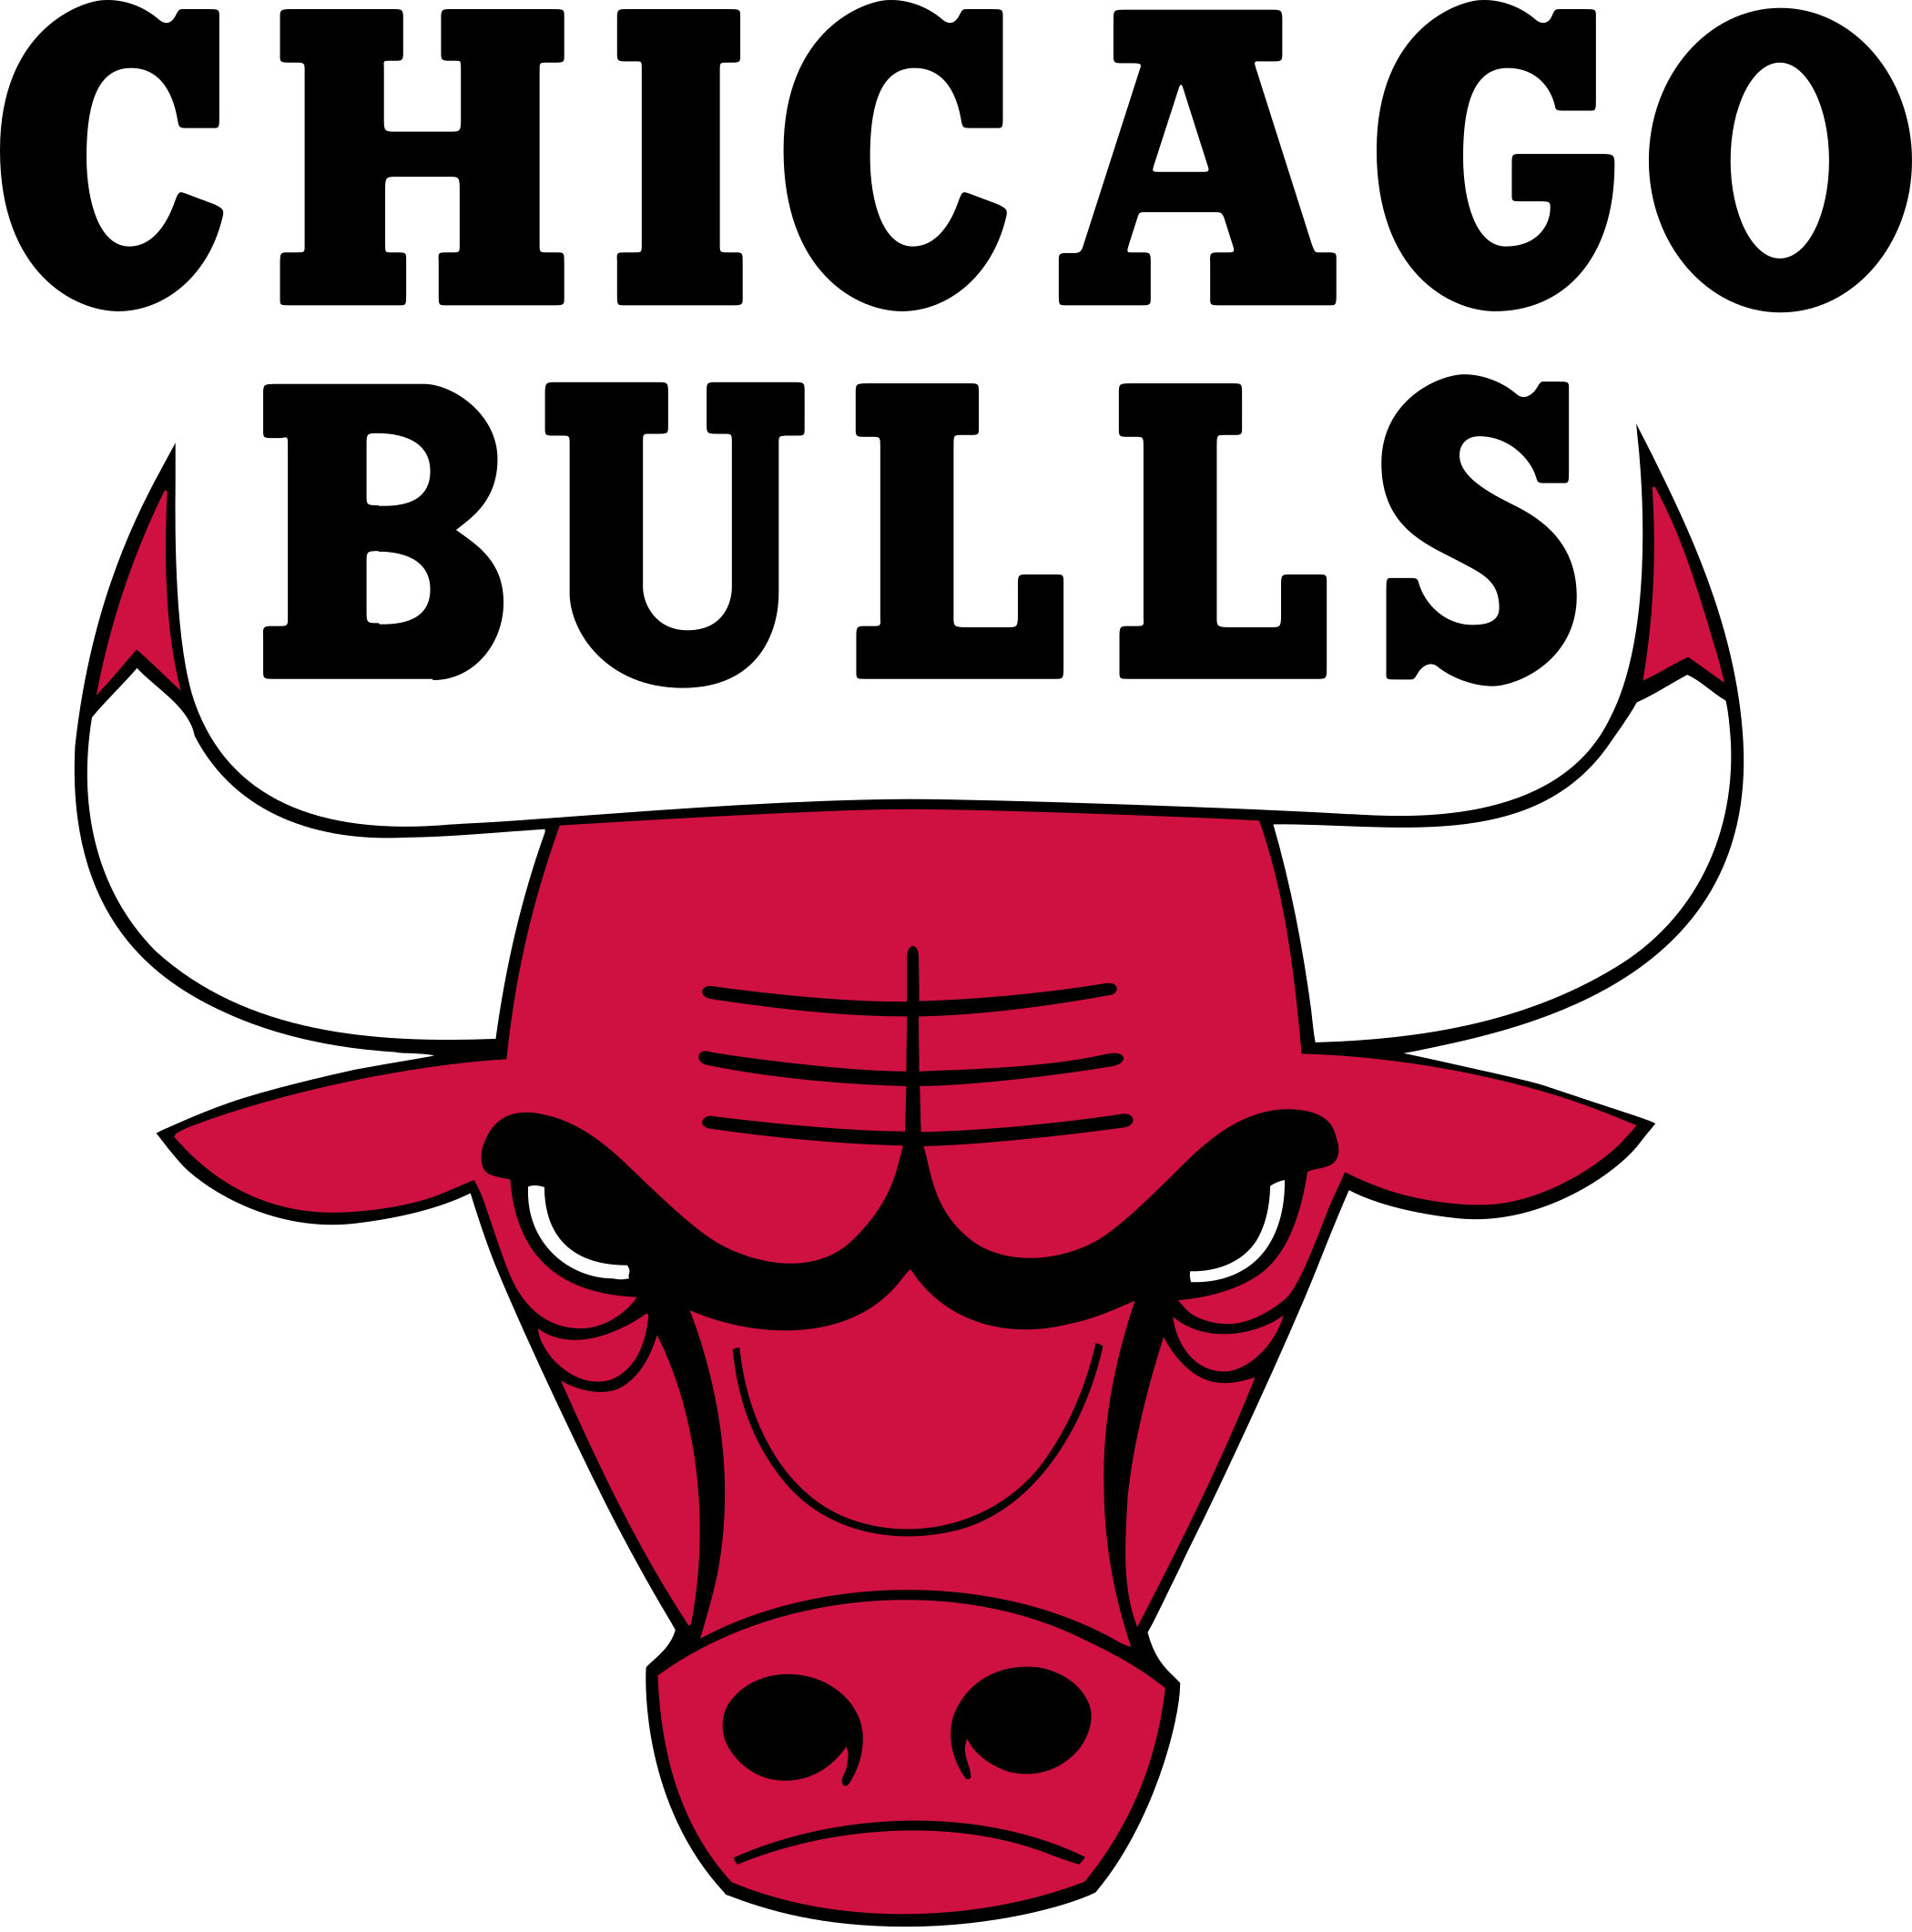 chicago bulls logo 1 - Chicago Bulls Logo